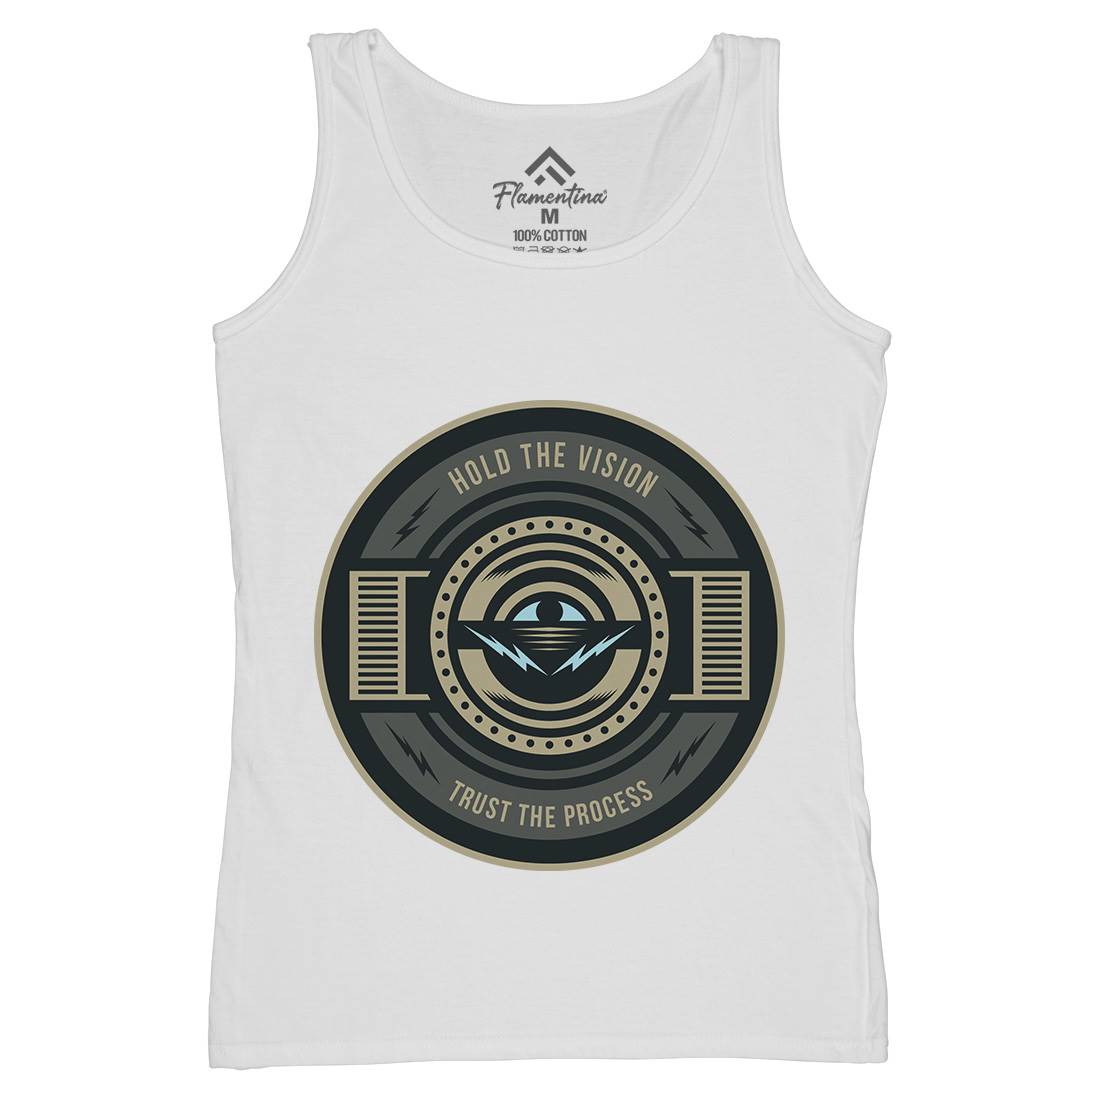 Hold The Vision Womens Organic Tank Top Vest Illuminati A331